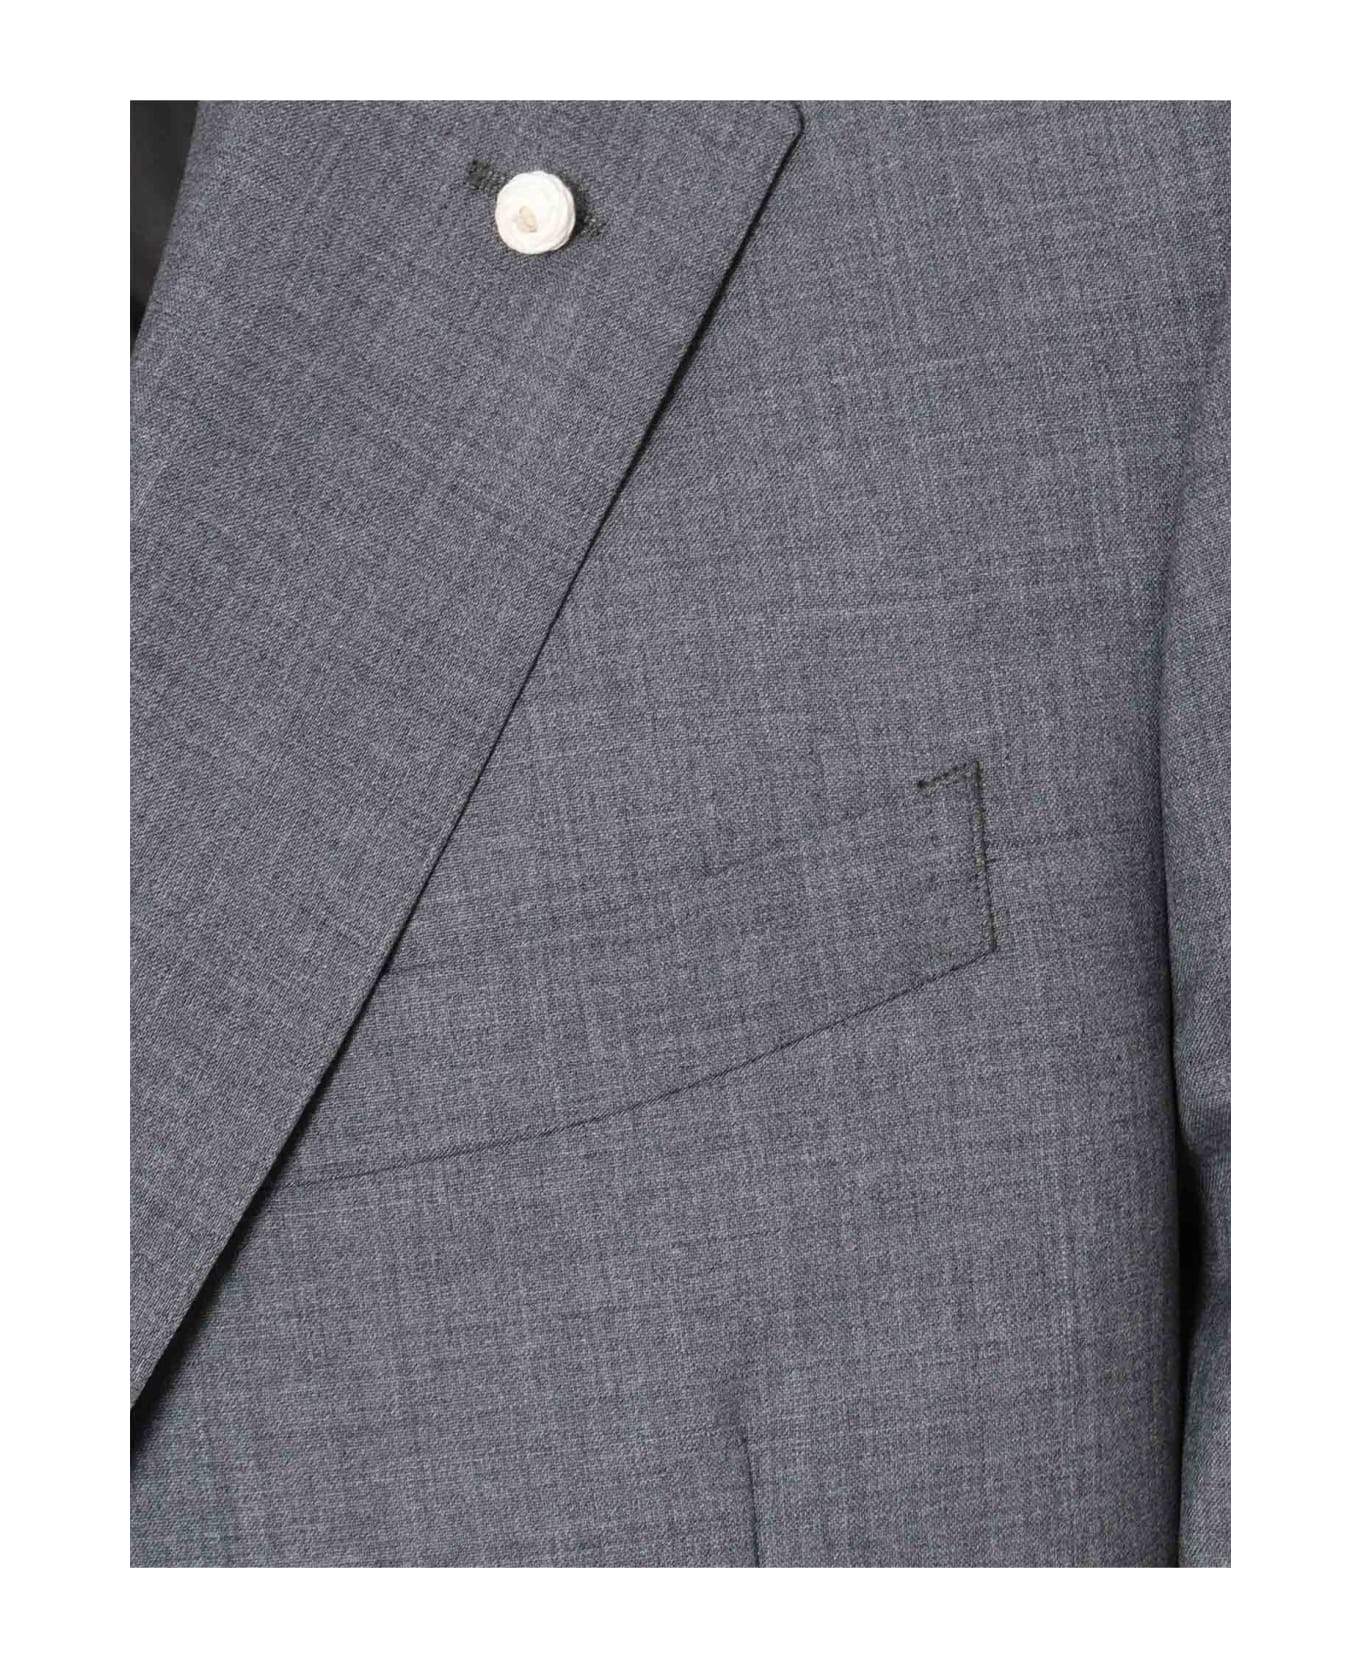 Luigi Bianchi Mantova Gray Men's Suit - GREY